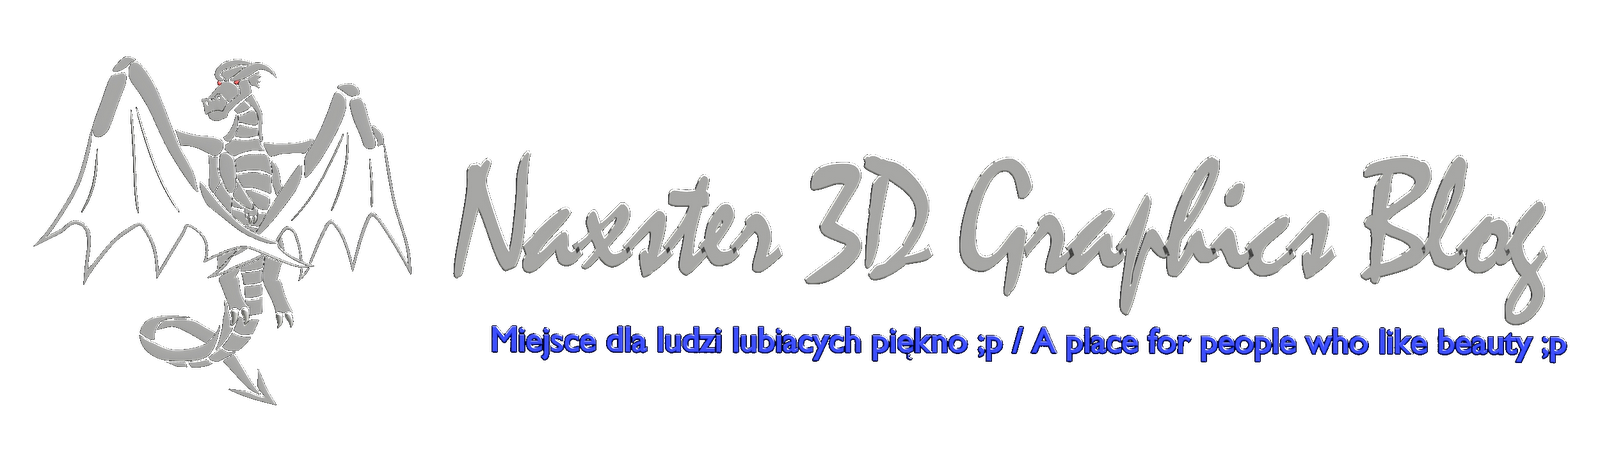 Naxster 3D Graphics Blog